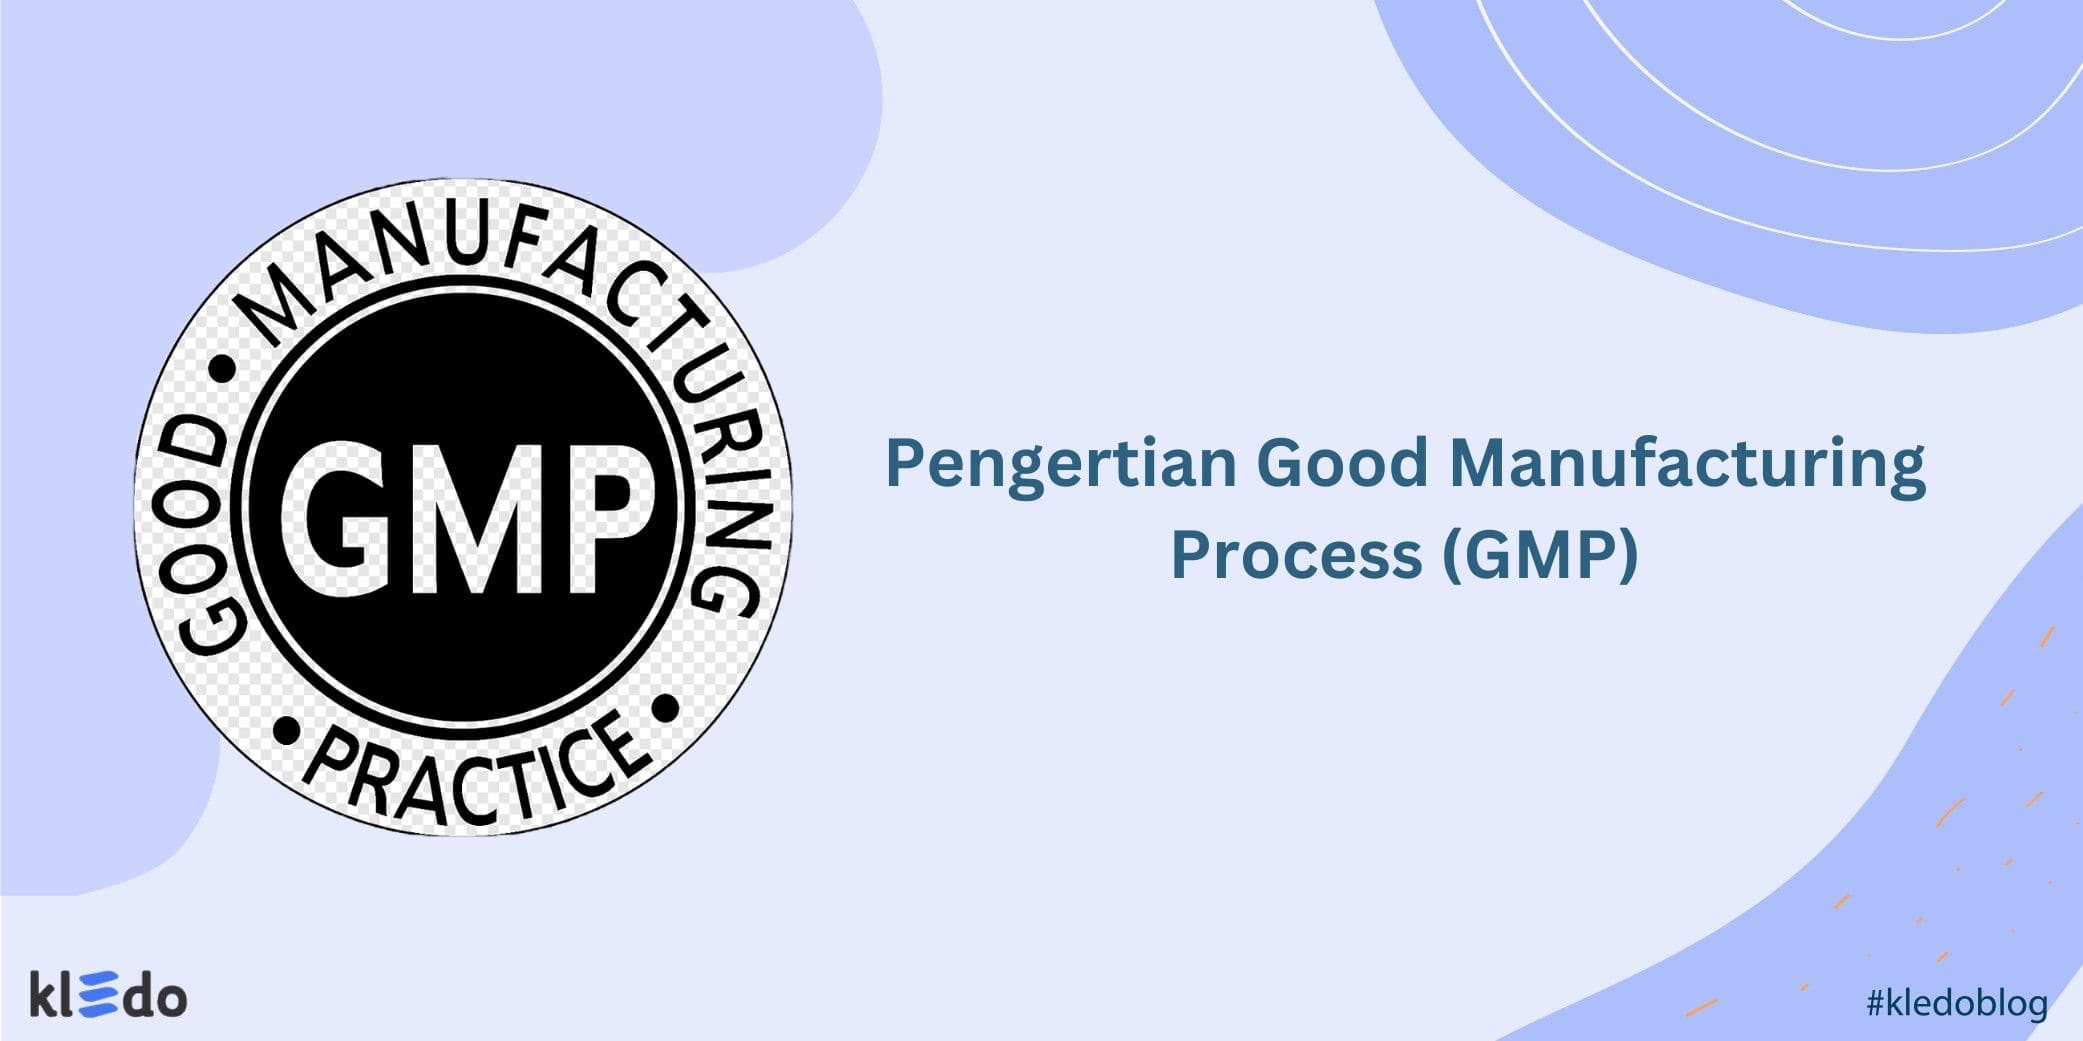 Good Manufacturing Process (GMP)